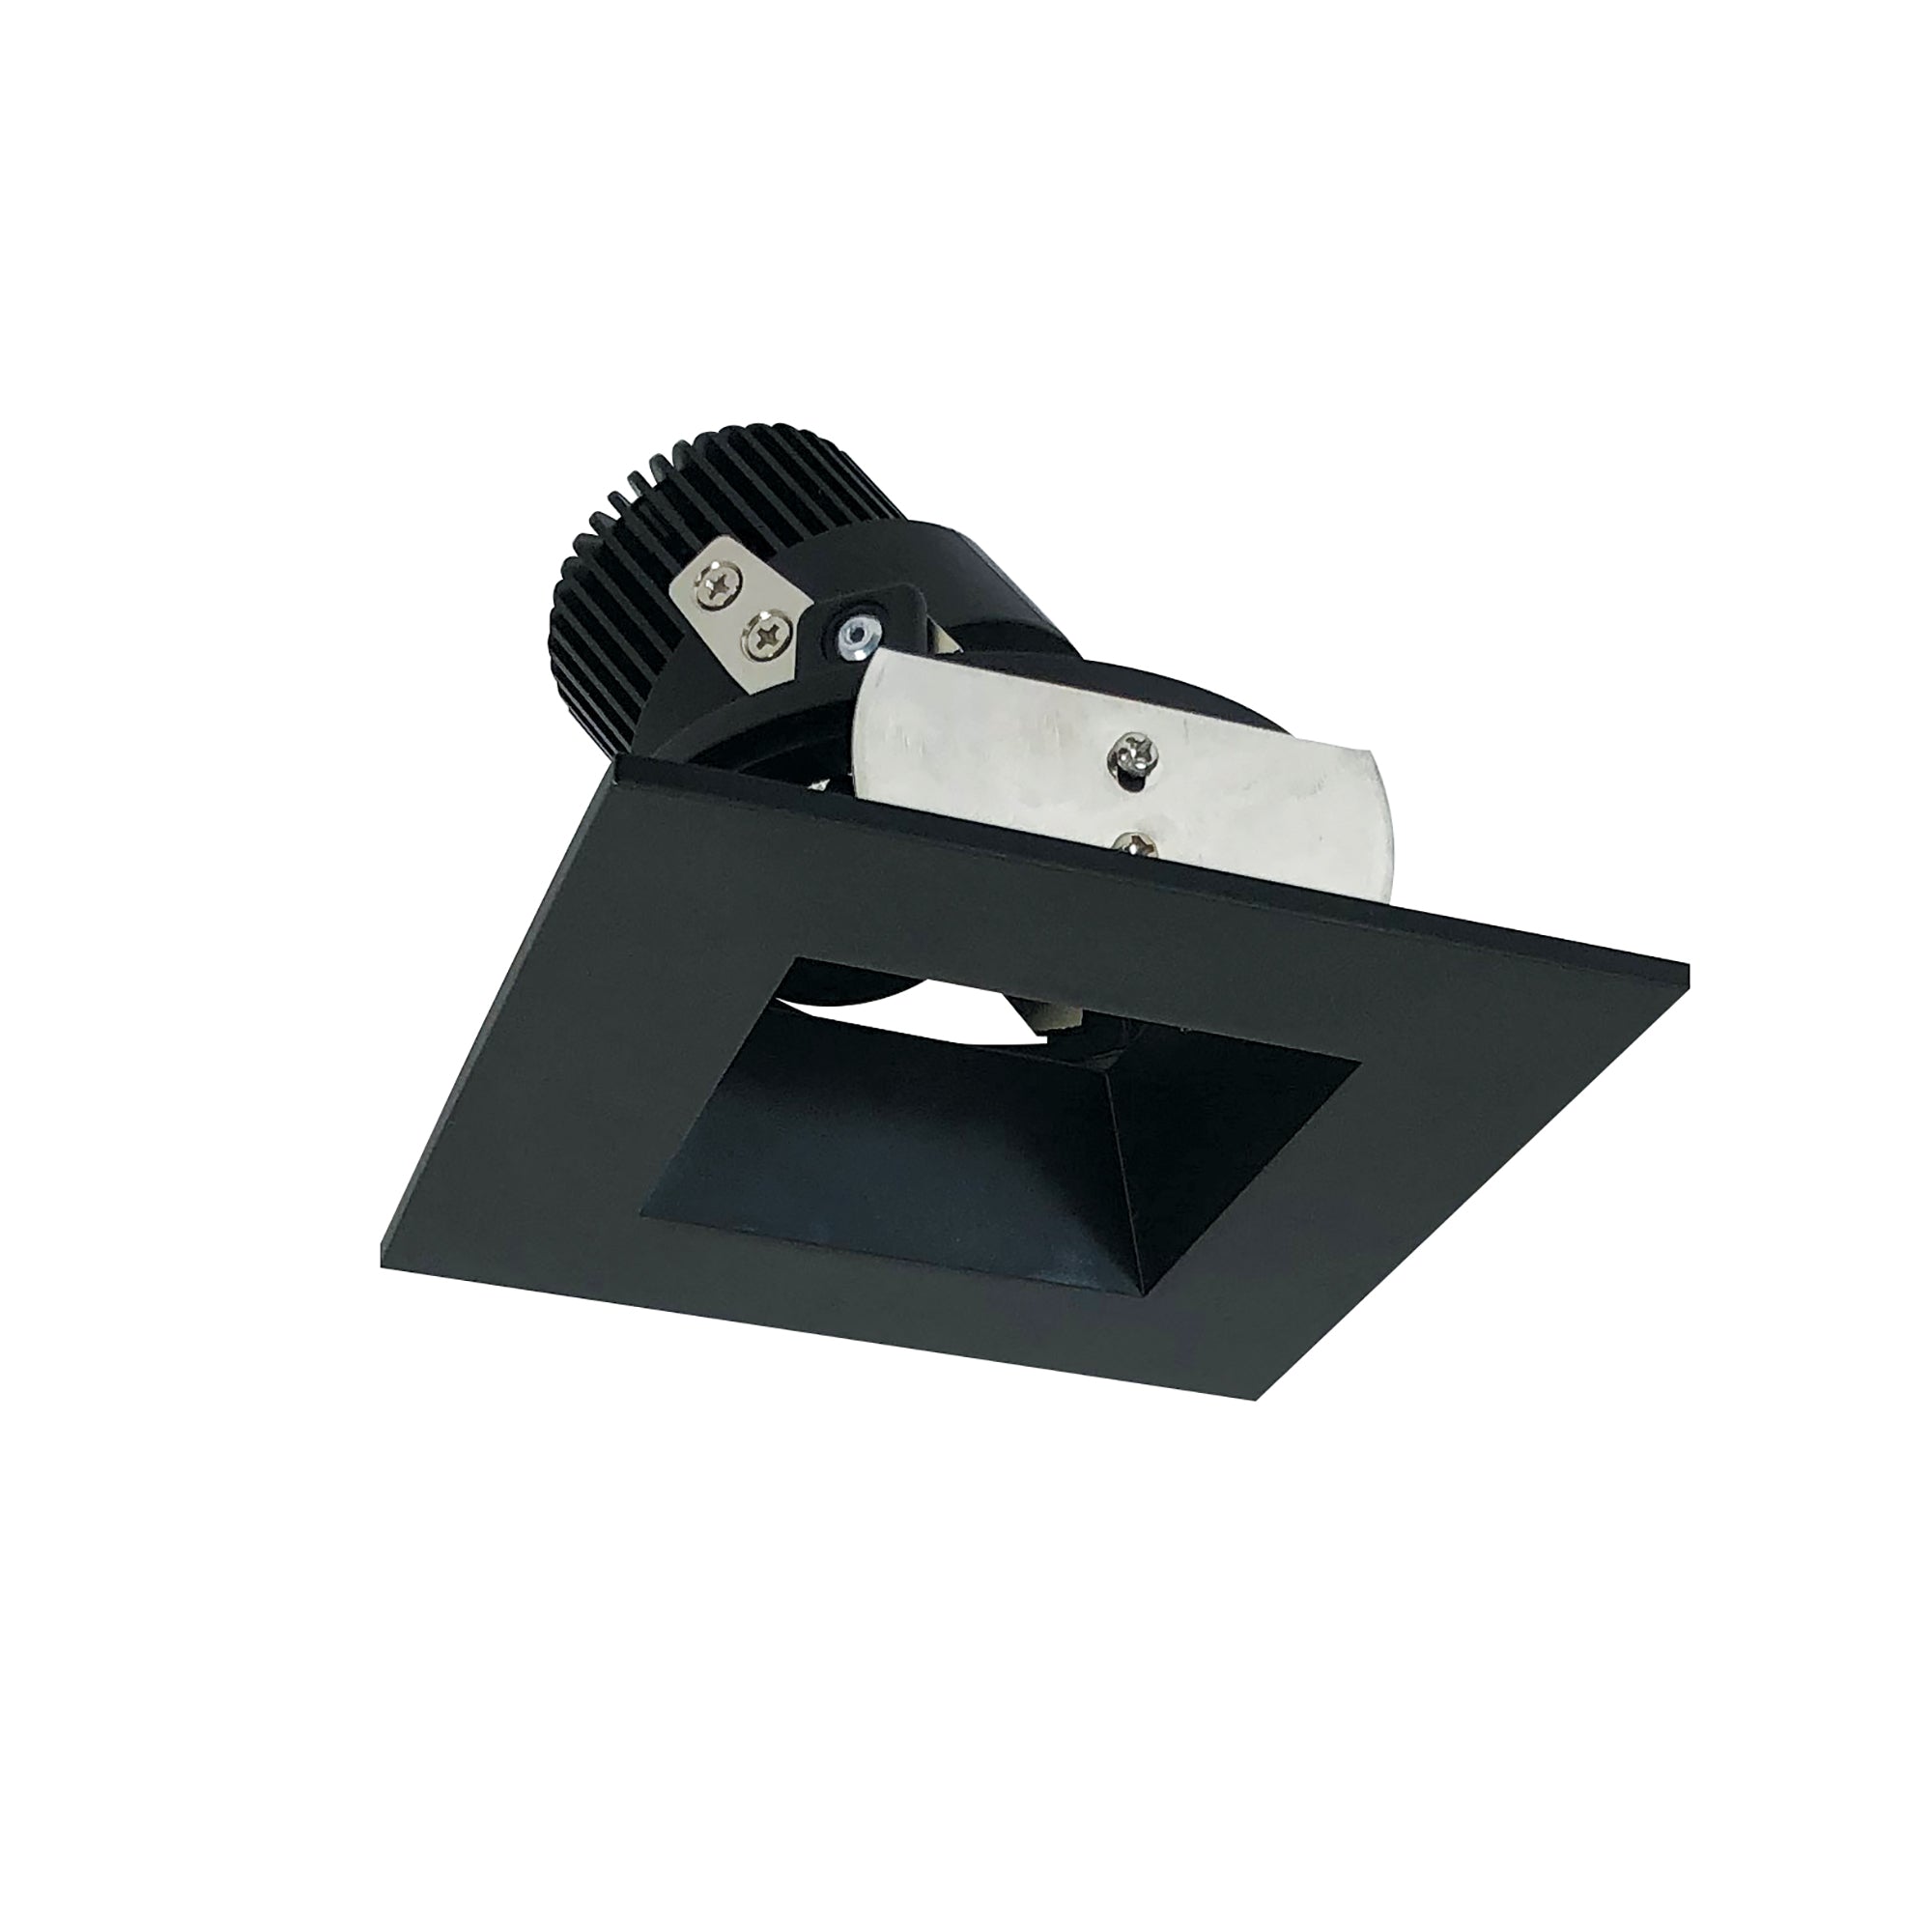 Nora Lighting NIO-4SDSQ35QBB 4" Iolite LED Square Adjustable Reflector With Square Aperture, 10-Degree Optic, 800lm / 12W, 3500K - Black Reflector / Black Flange